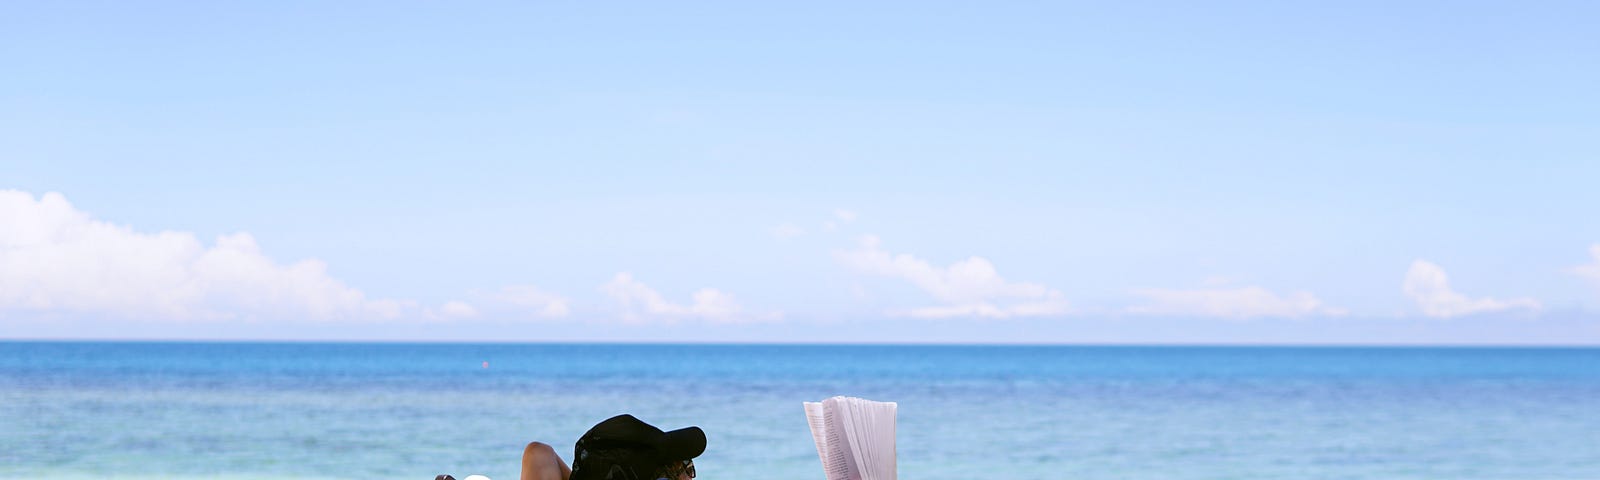 woman sitting in chair on beach